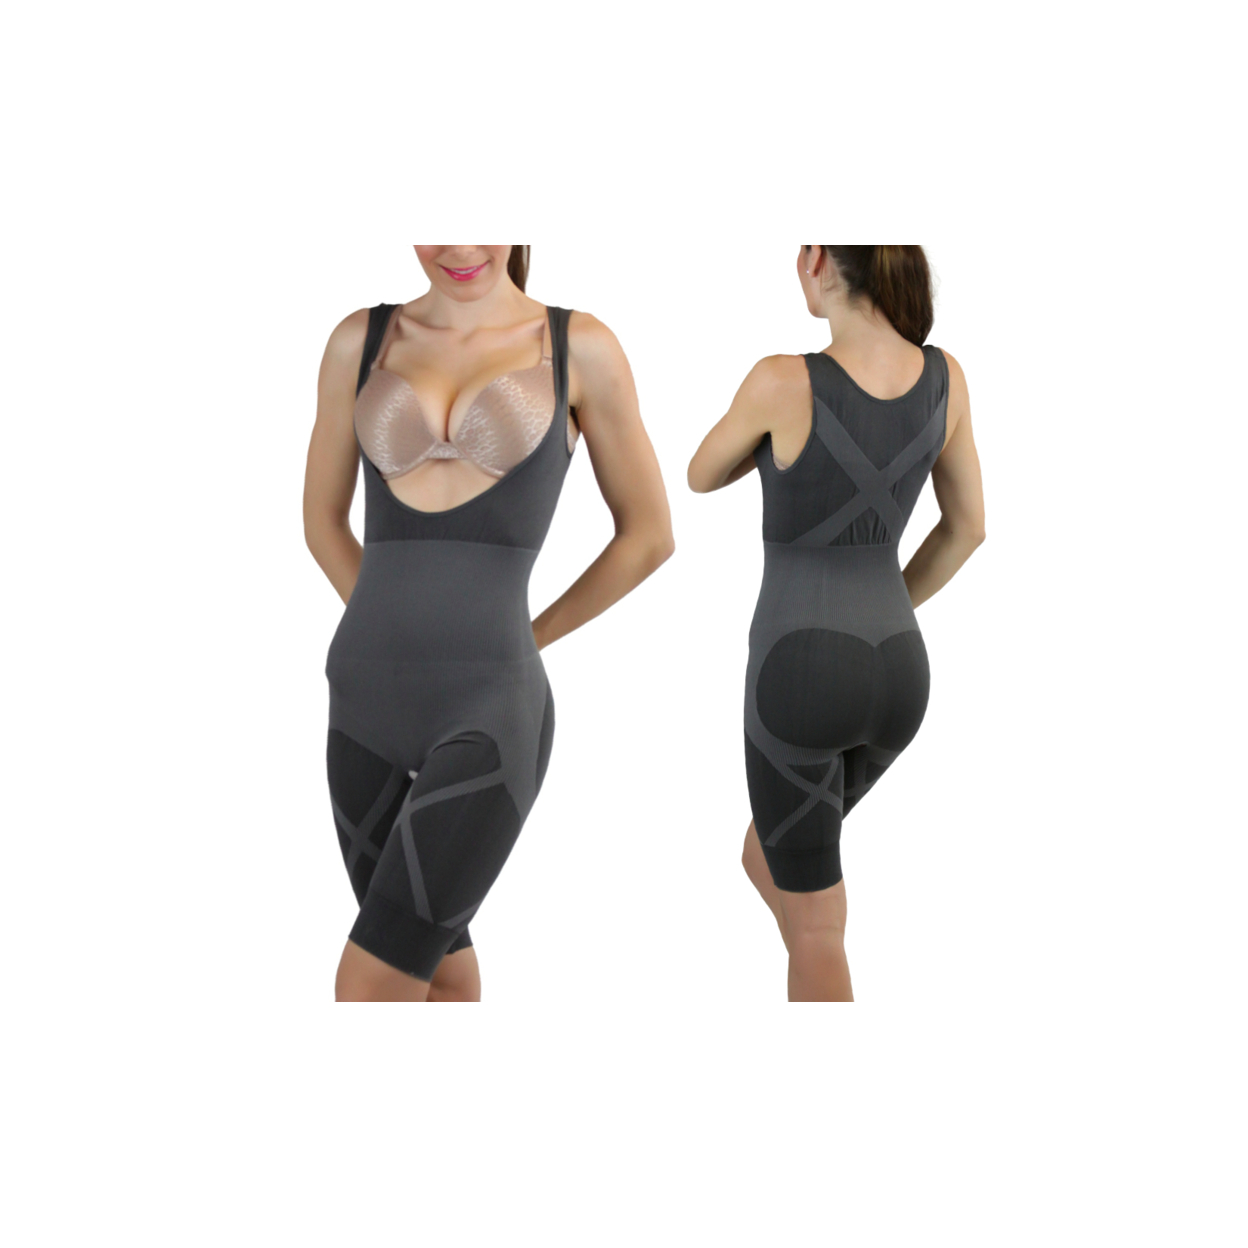 Women's Bamboo Slimming Body Suit Shaper - Gray, S/M